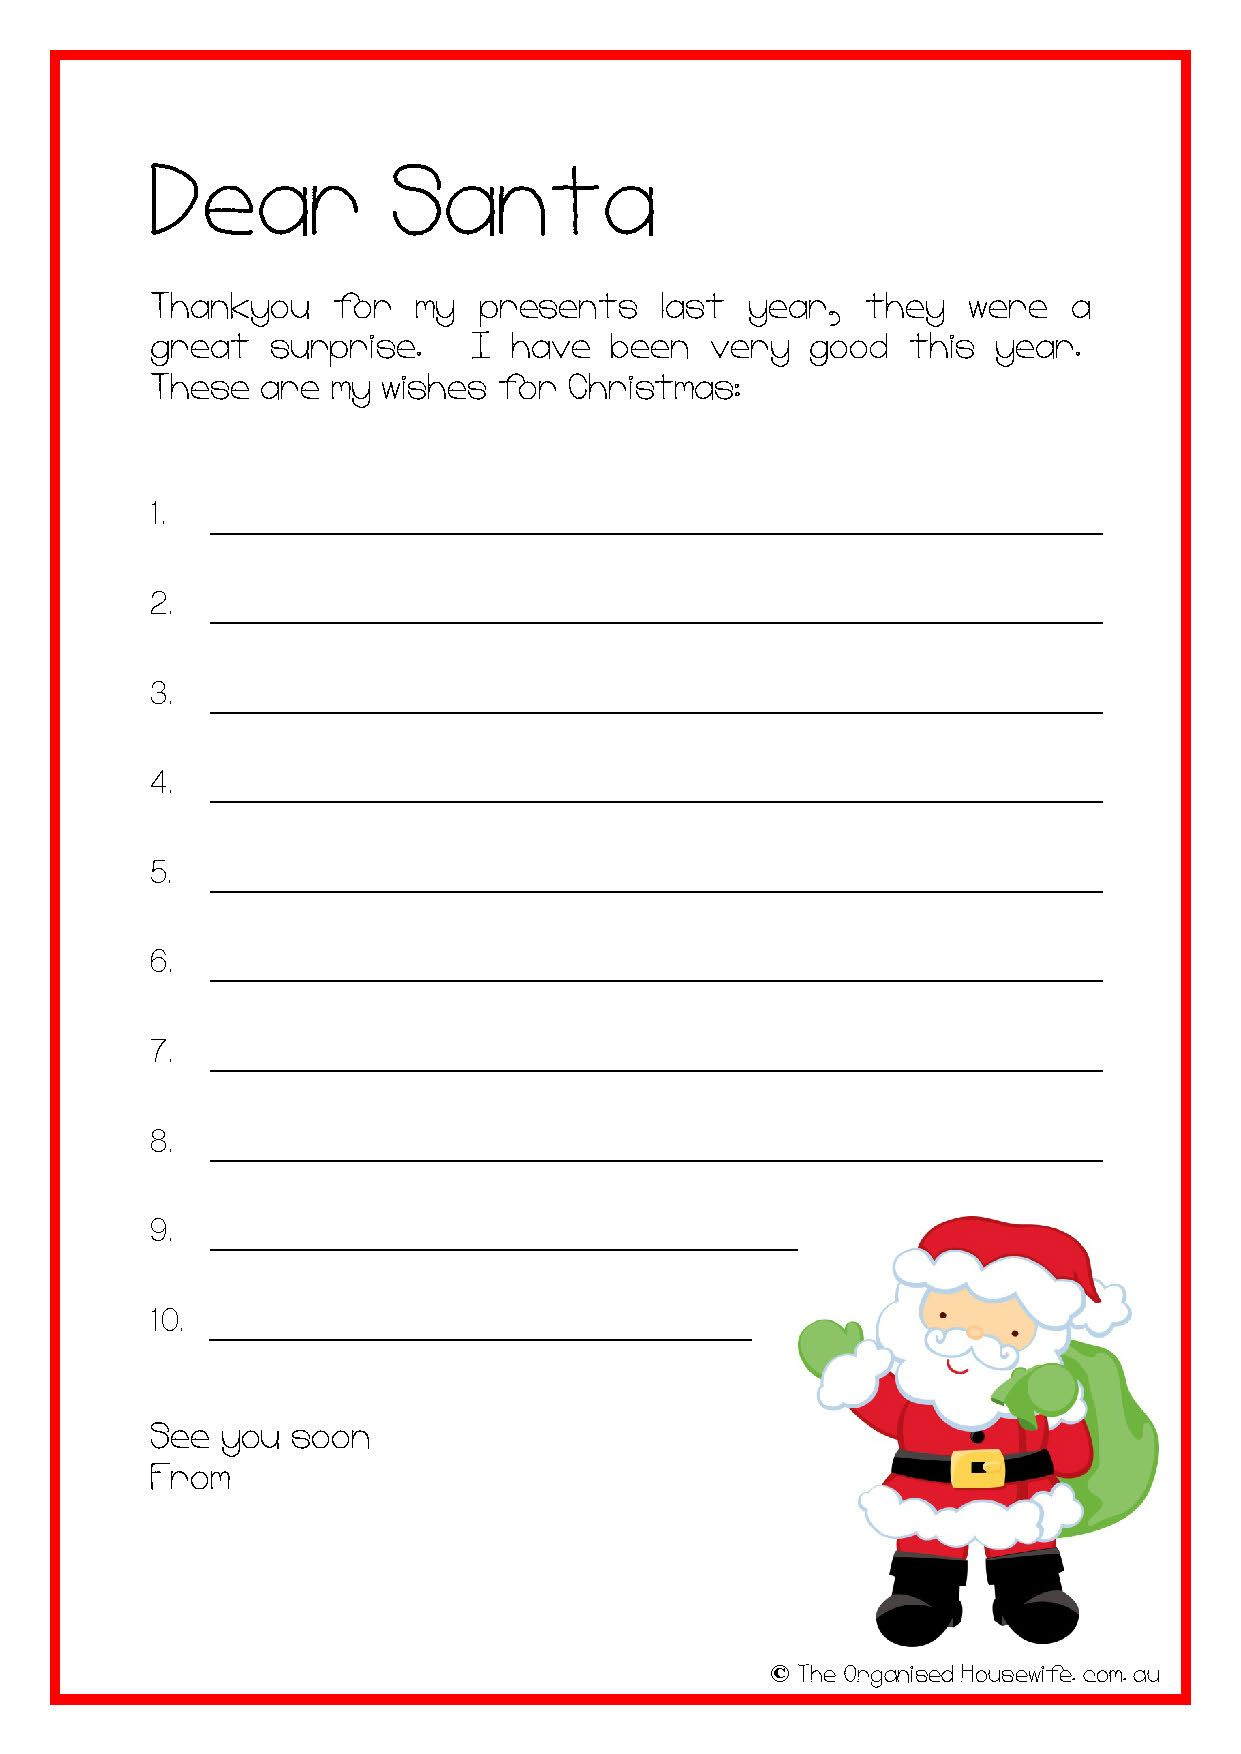 Dear Santa Letter Template - Printable Kids Wish List to Santa Pinterest